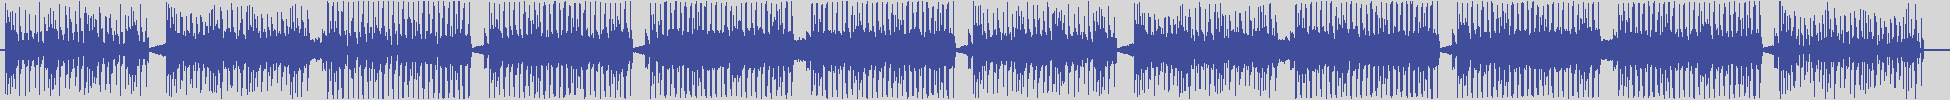 atomic_recordings [AR007] Frankie Borrell - All so Beautiful [Conkilla Deep  Mix] audio wave form